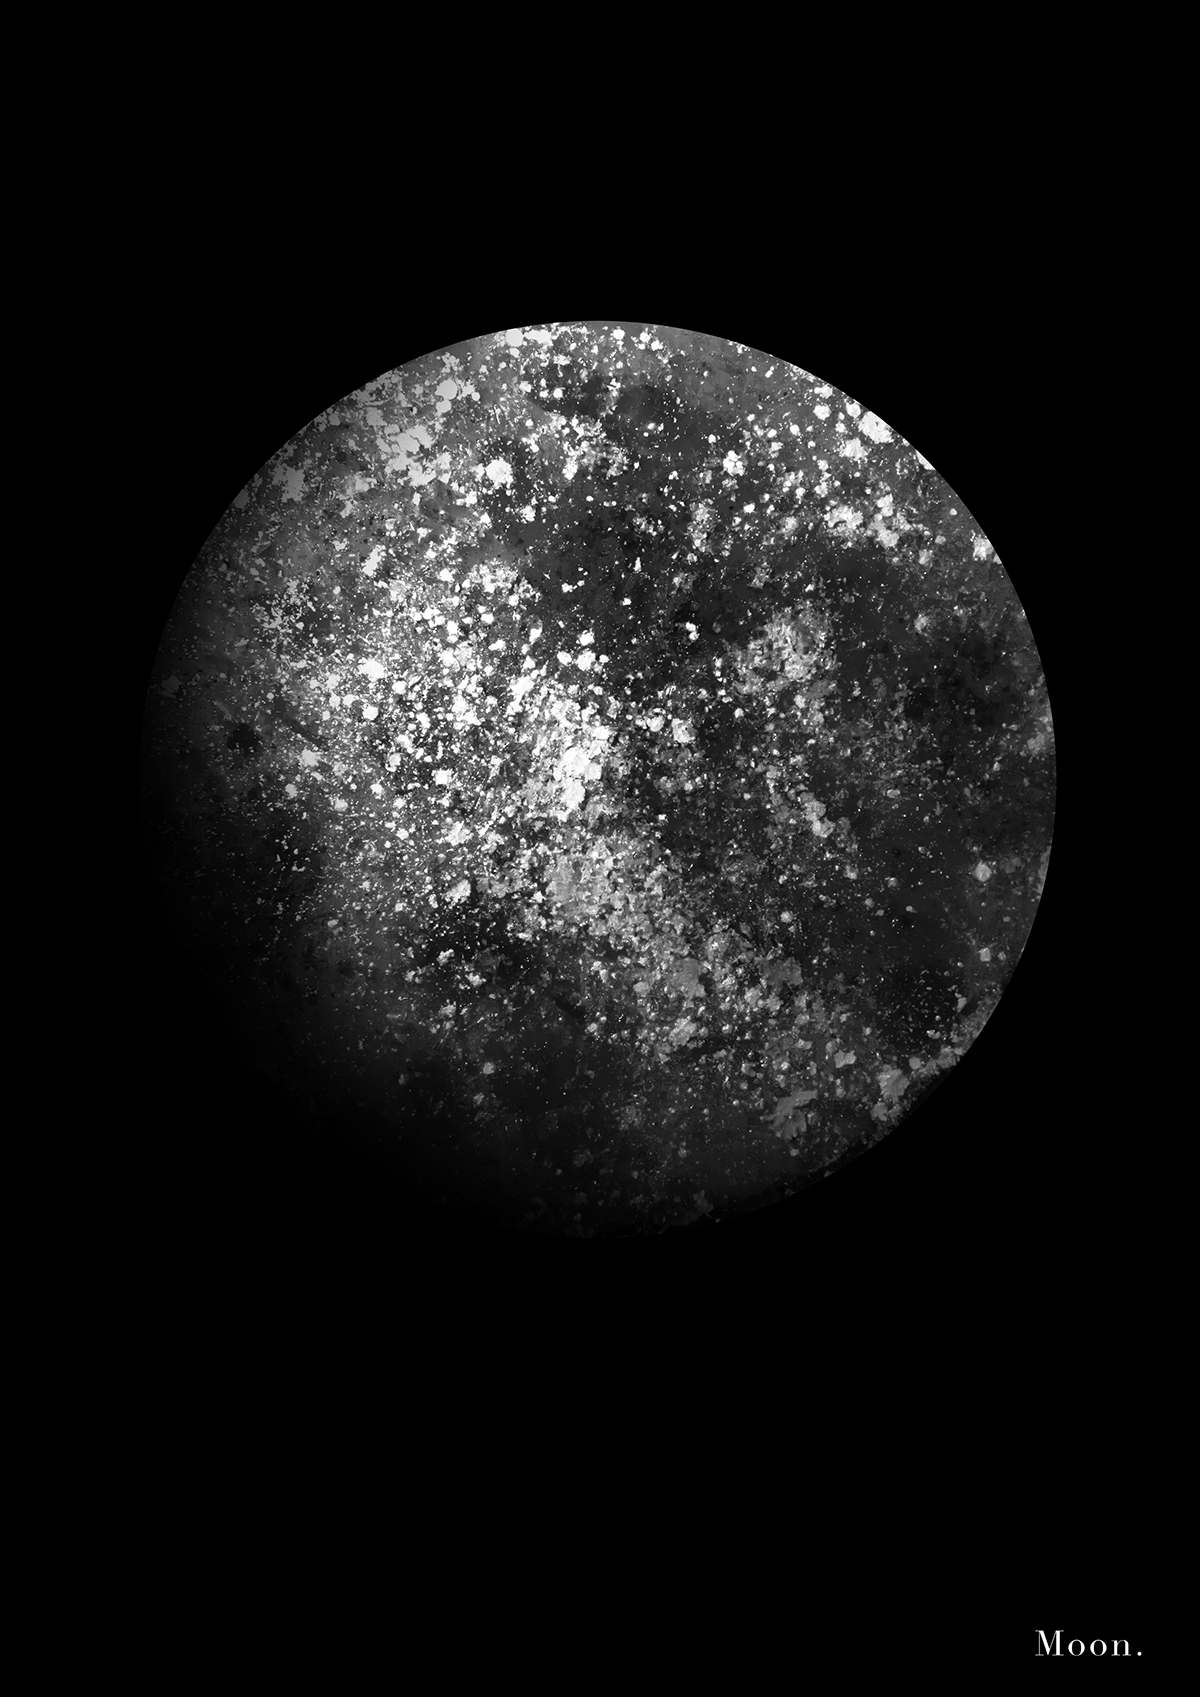 Planets Pan earth Sun moon mars Jupiter uranus light colors ink dust water wacom Ps25Under25